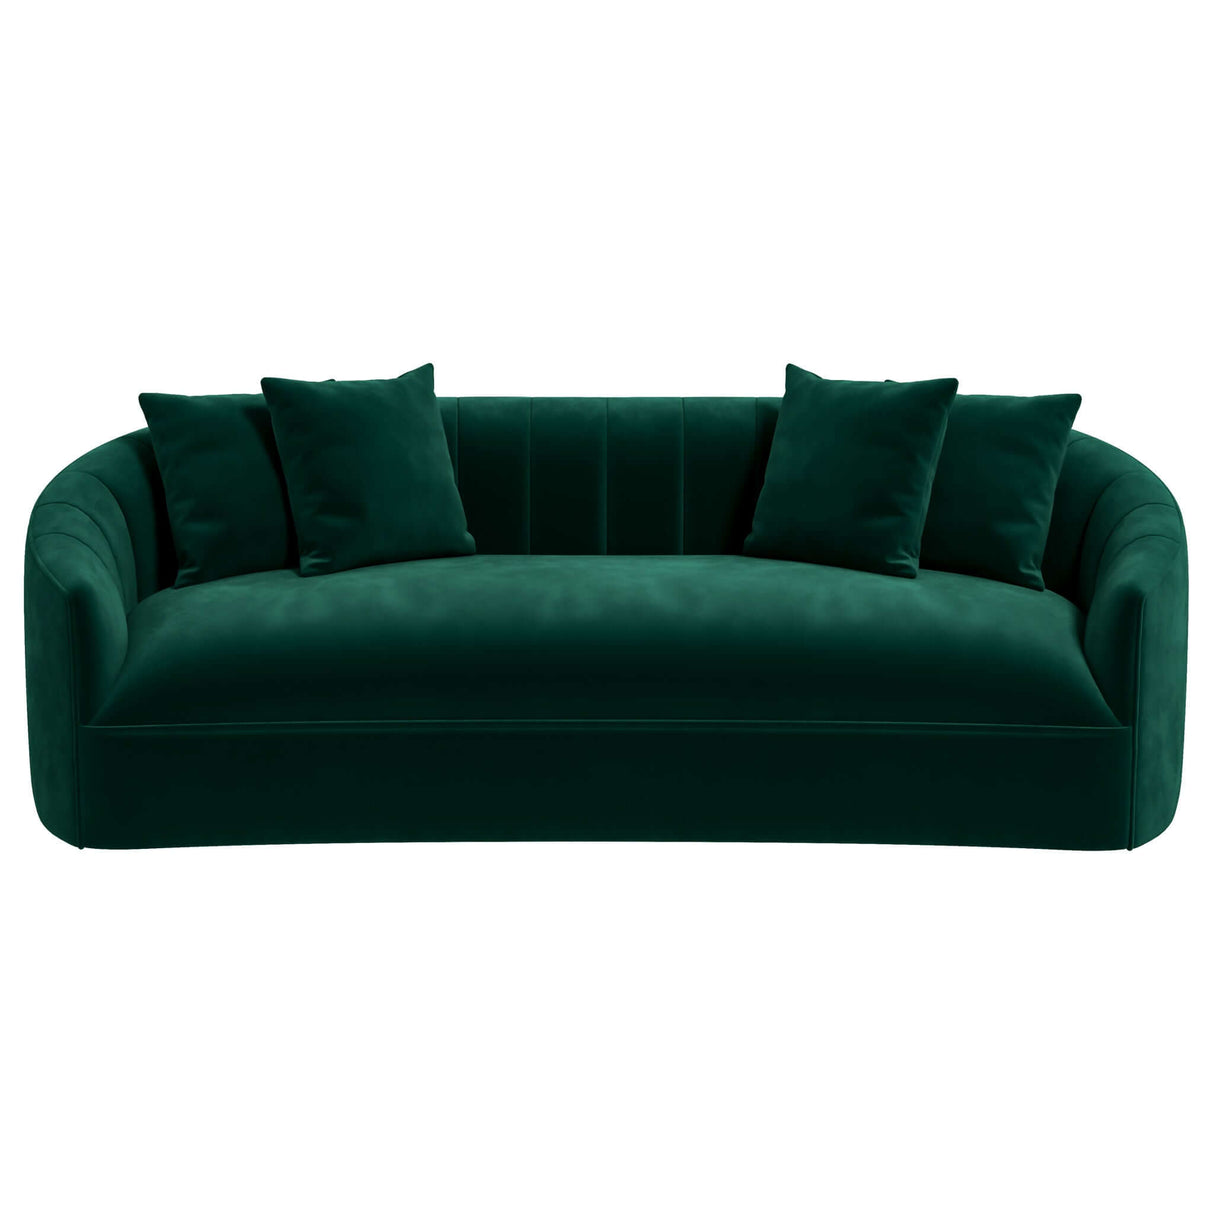 Green mid century modern sofa